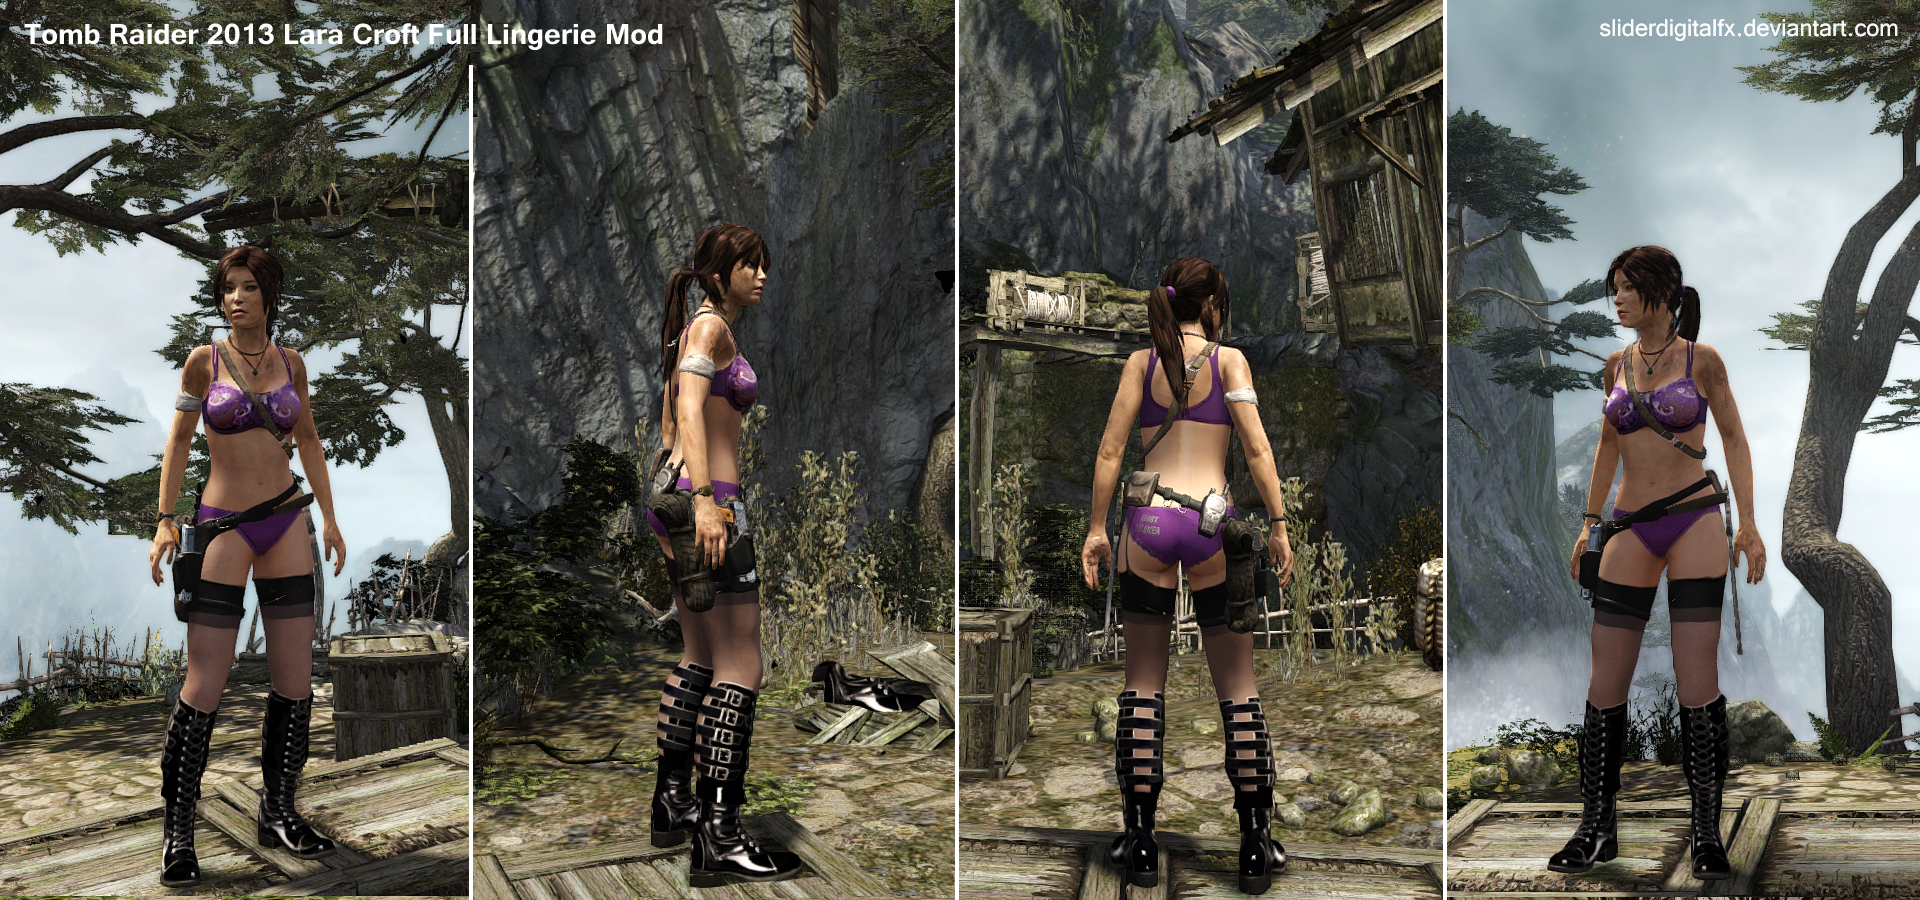 Tomb Raider 2013 Nude mod by ATL 2020 Default + Hunter lp 